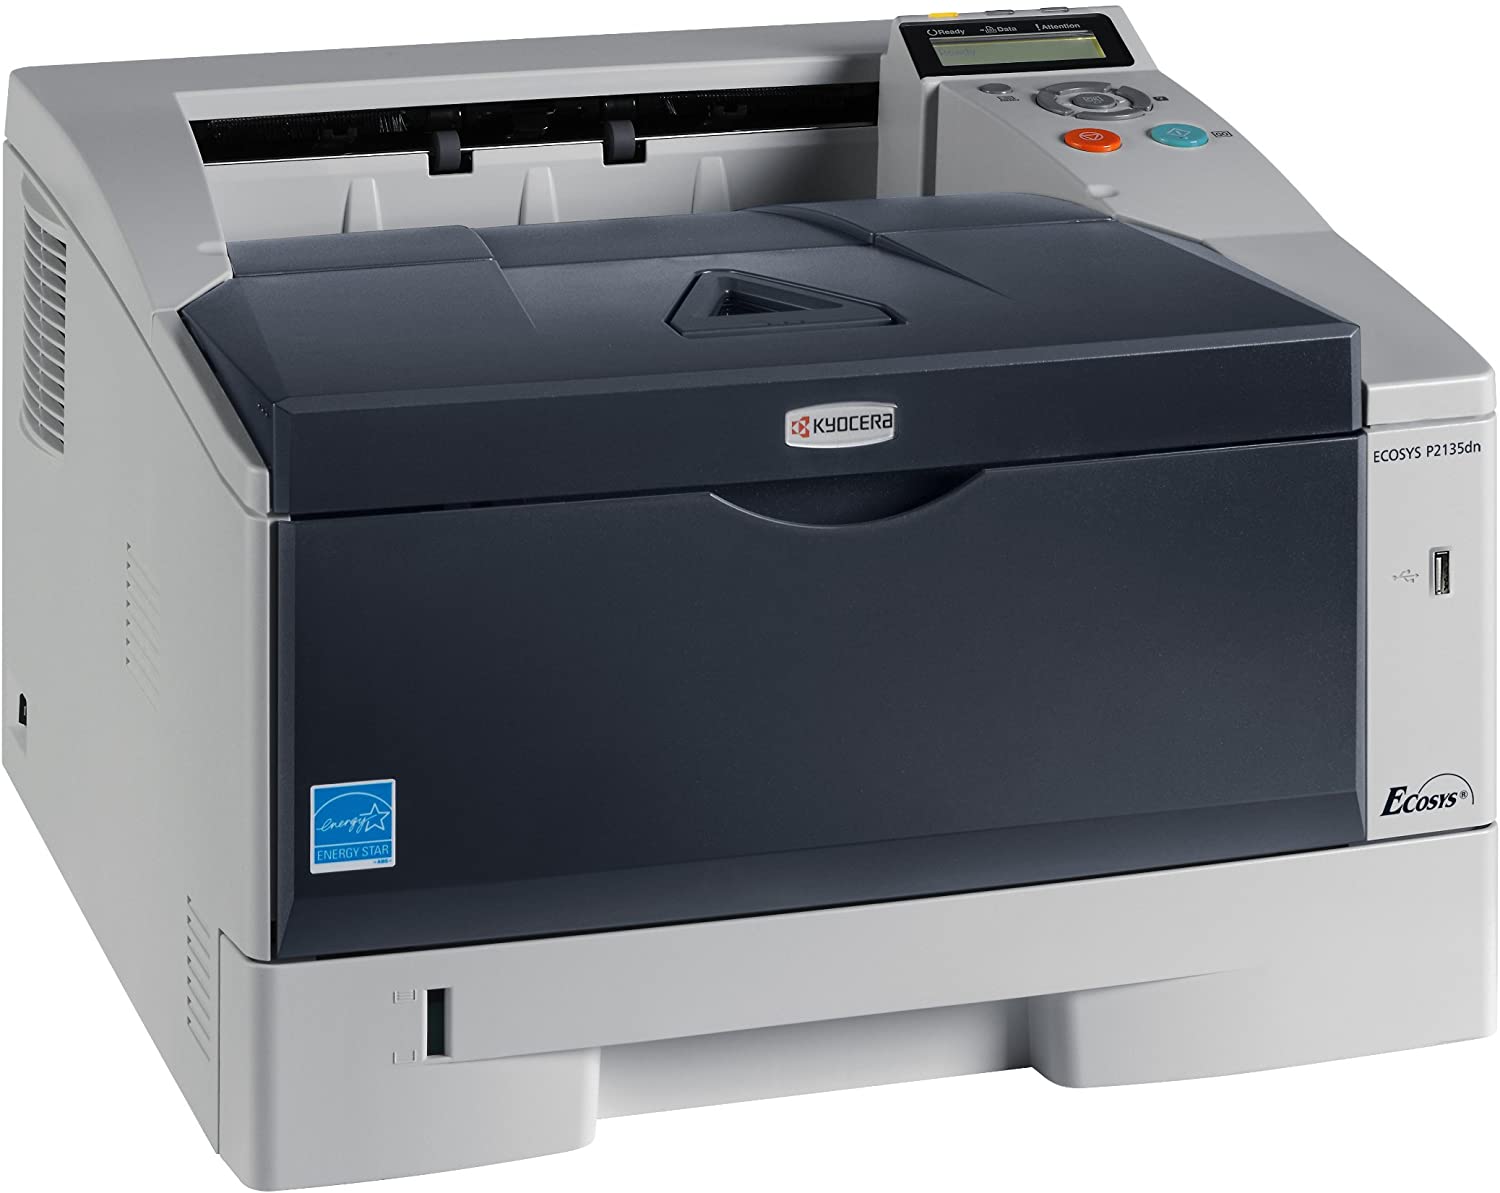 KYOCERA Ecosys p2135dn A4 SW – Monochrome laser printer